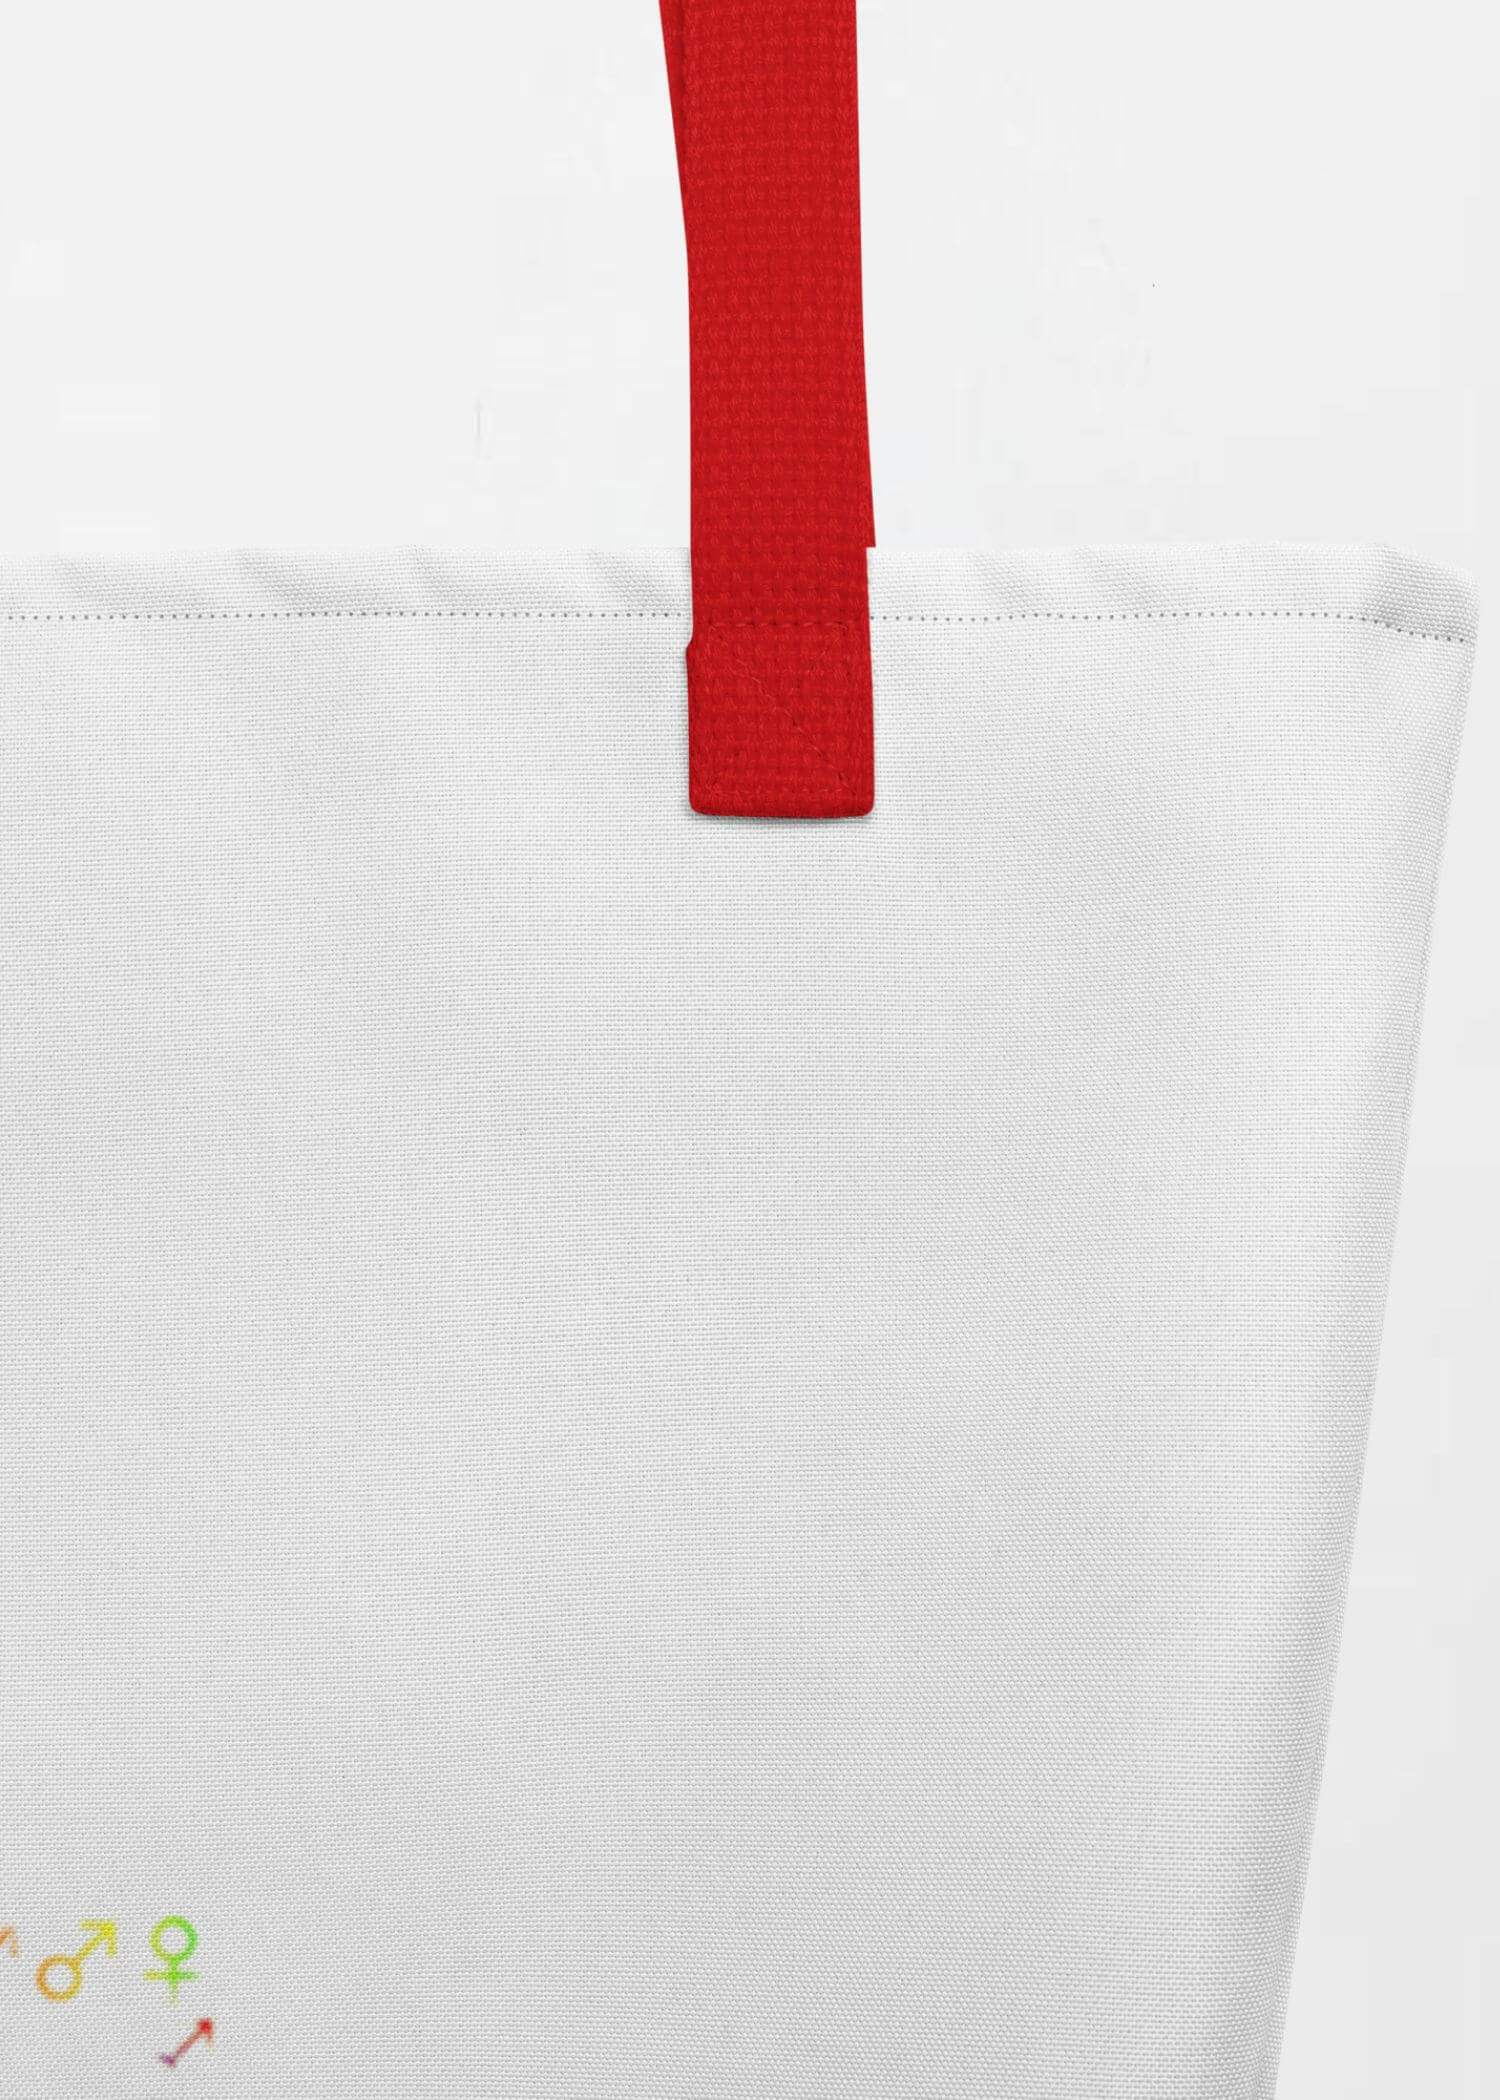 Large Unisex Tote Bag  miteigi Logo Branded product item miteigiYūki Fitness Sports Activewear by miteigi products brand items luggage baggage bags multicolor White red